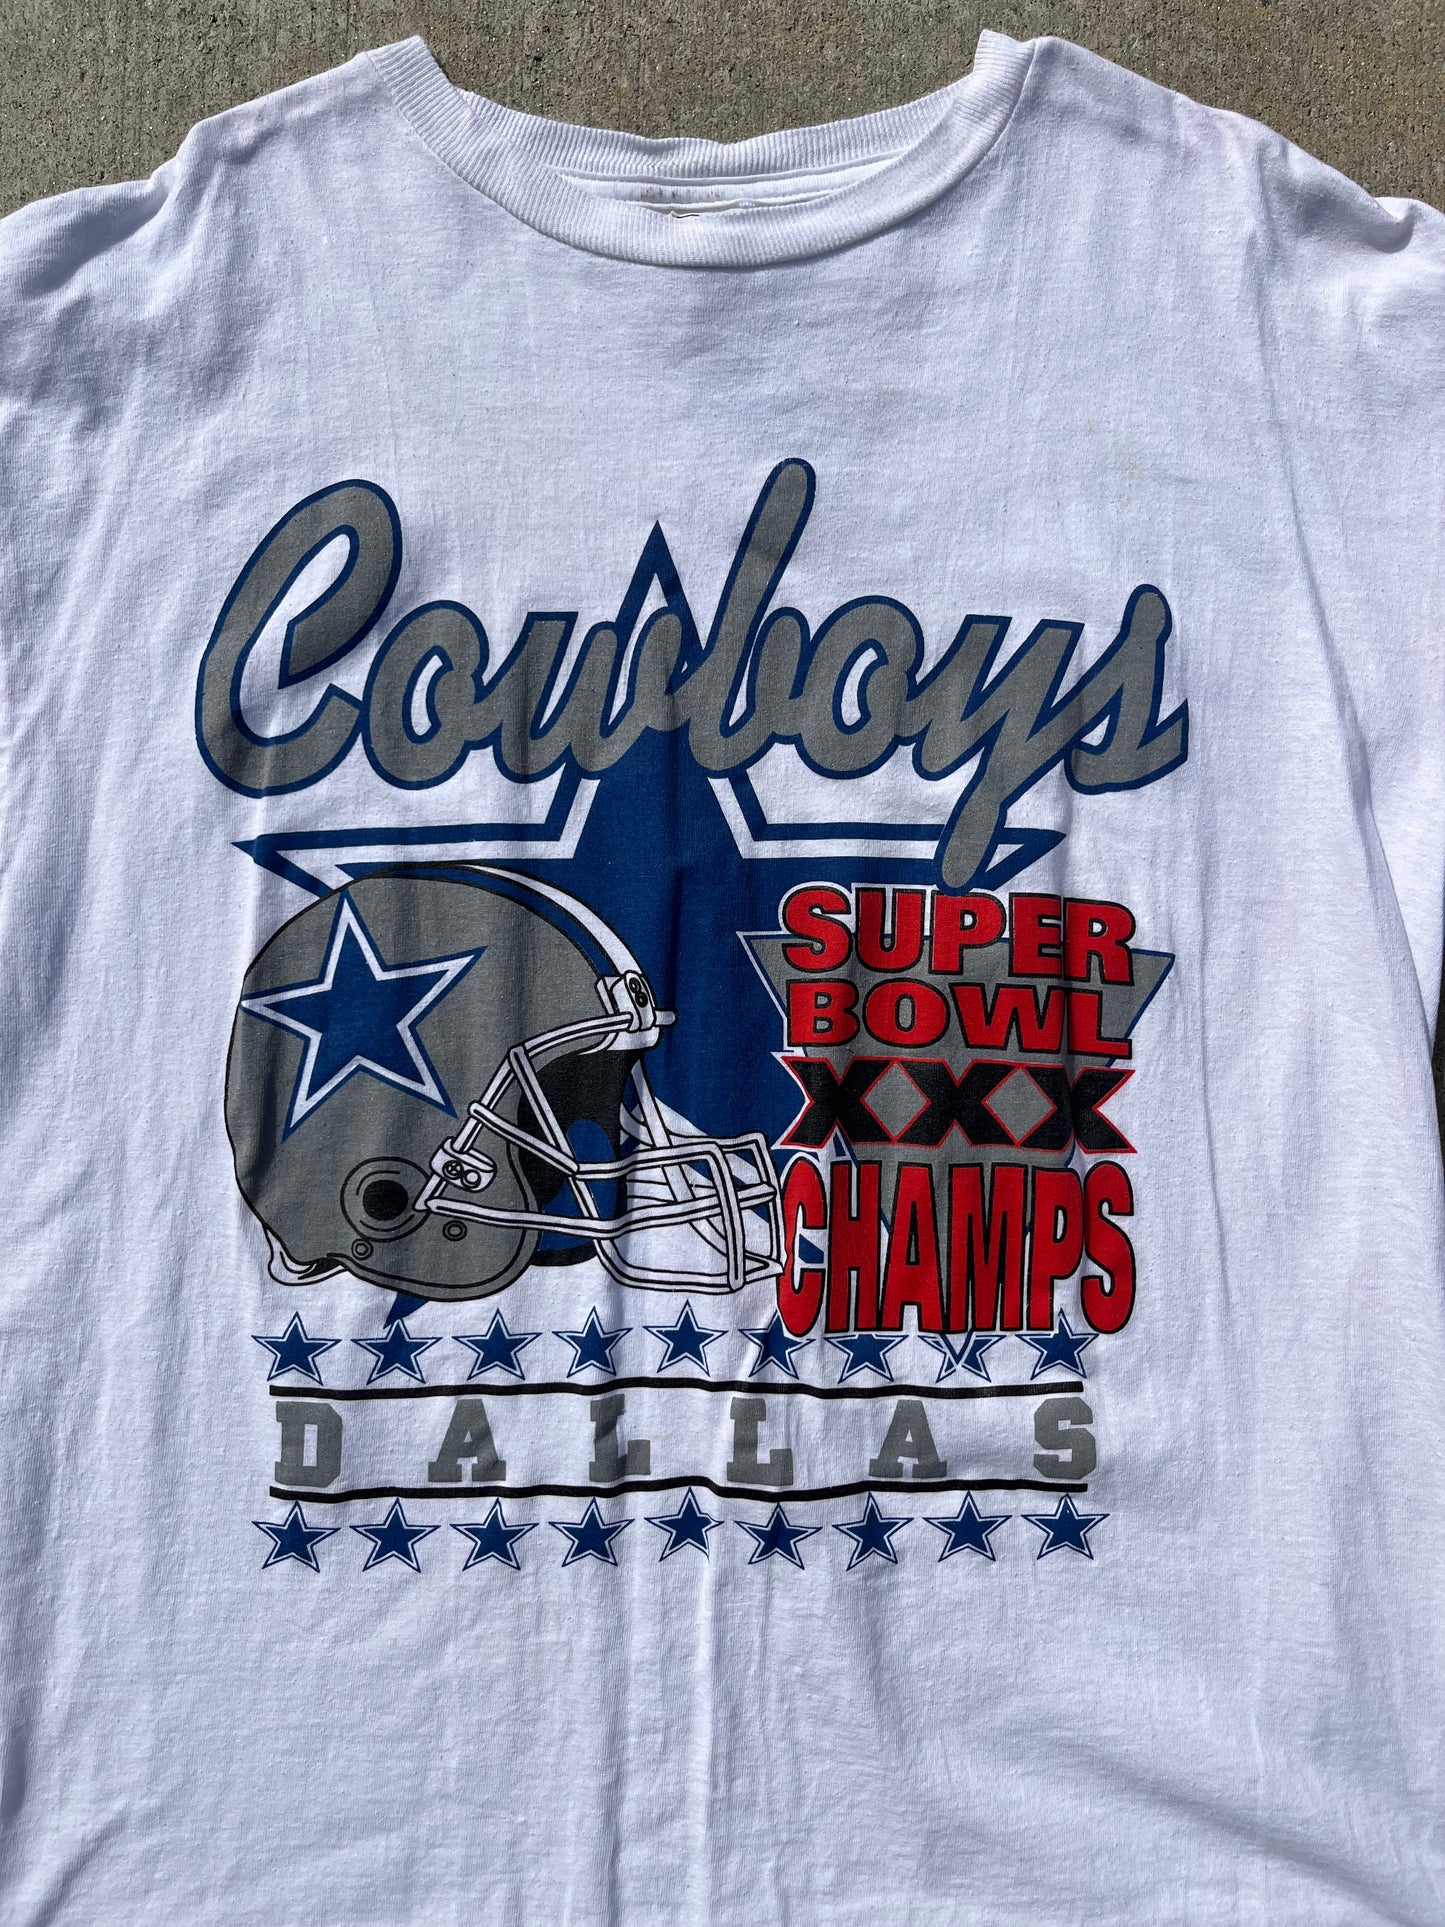 Cowboys Super Bowl Champs Tee